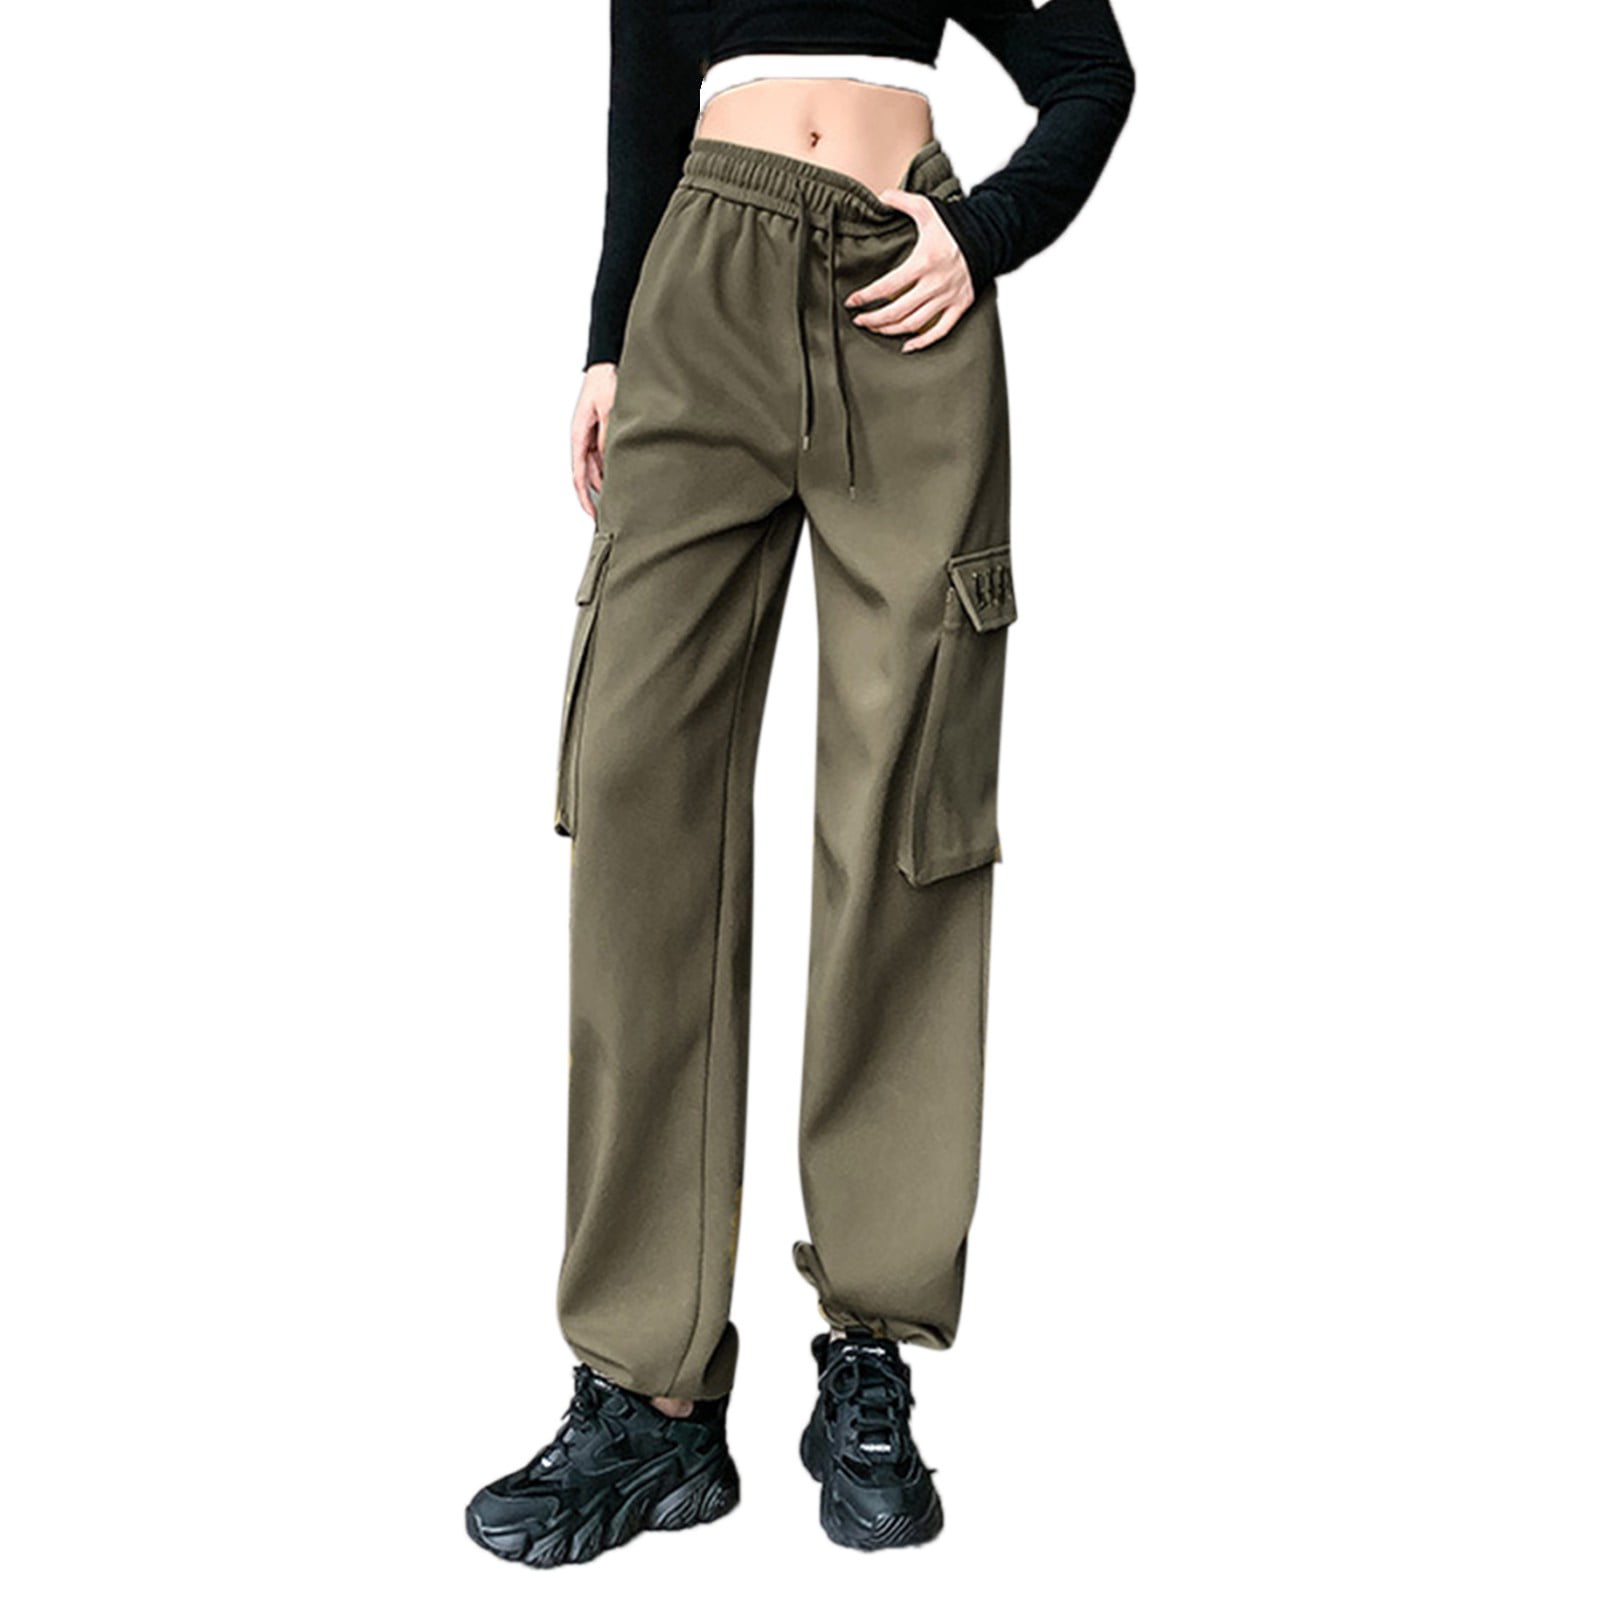 Larisalt Cargo Pants Women,Women Elastic Waist Cotton Medium Twill Pants  Green,S - Walmart.com